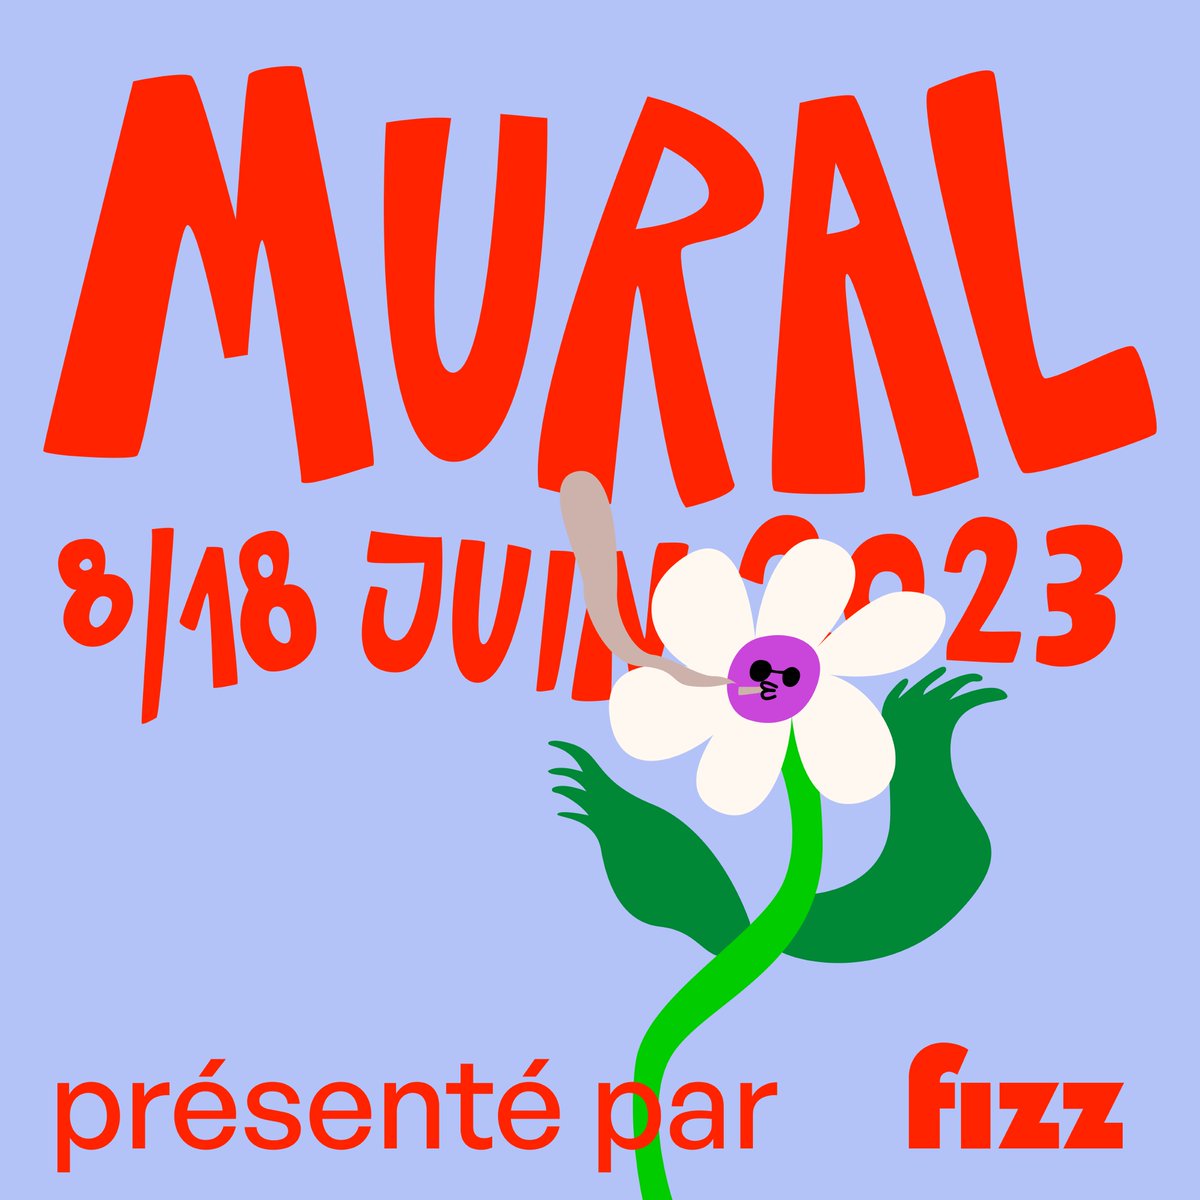 MURALfestival tweet picture